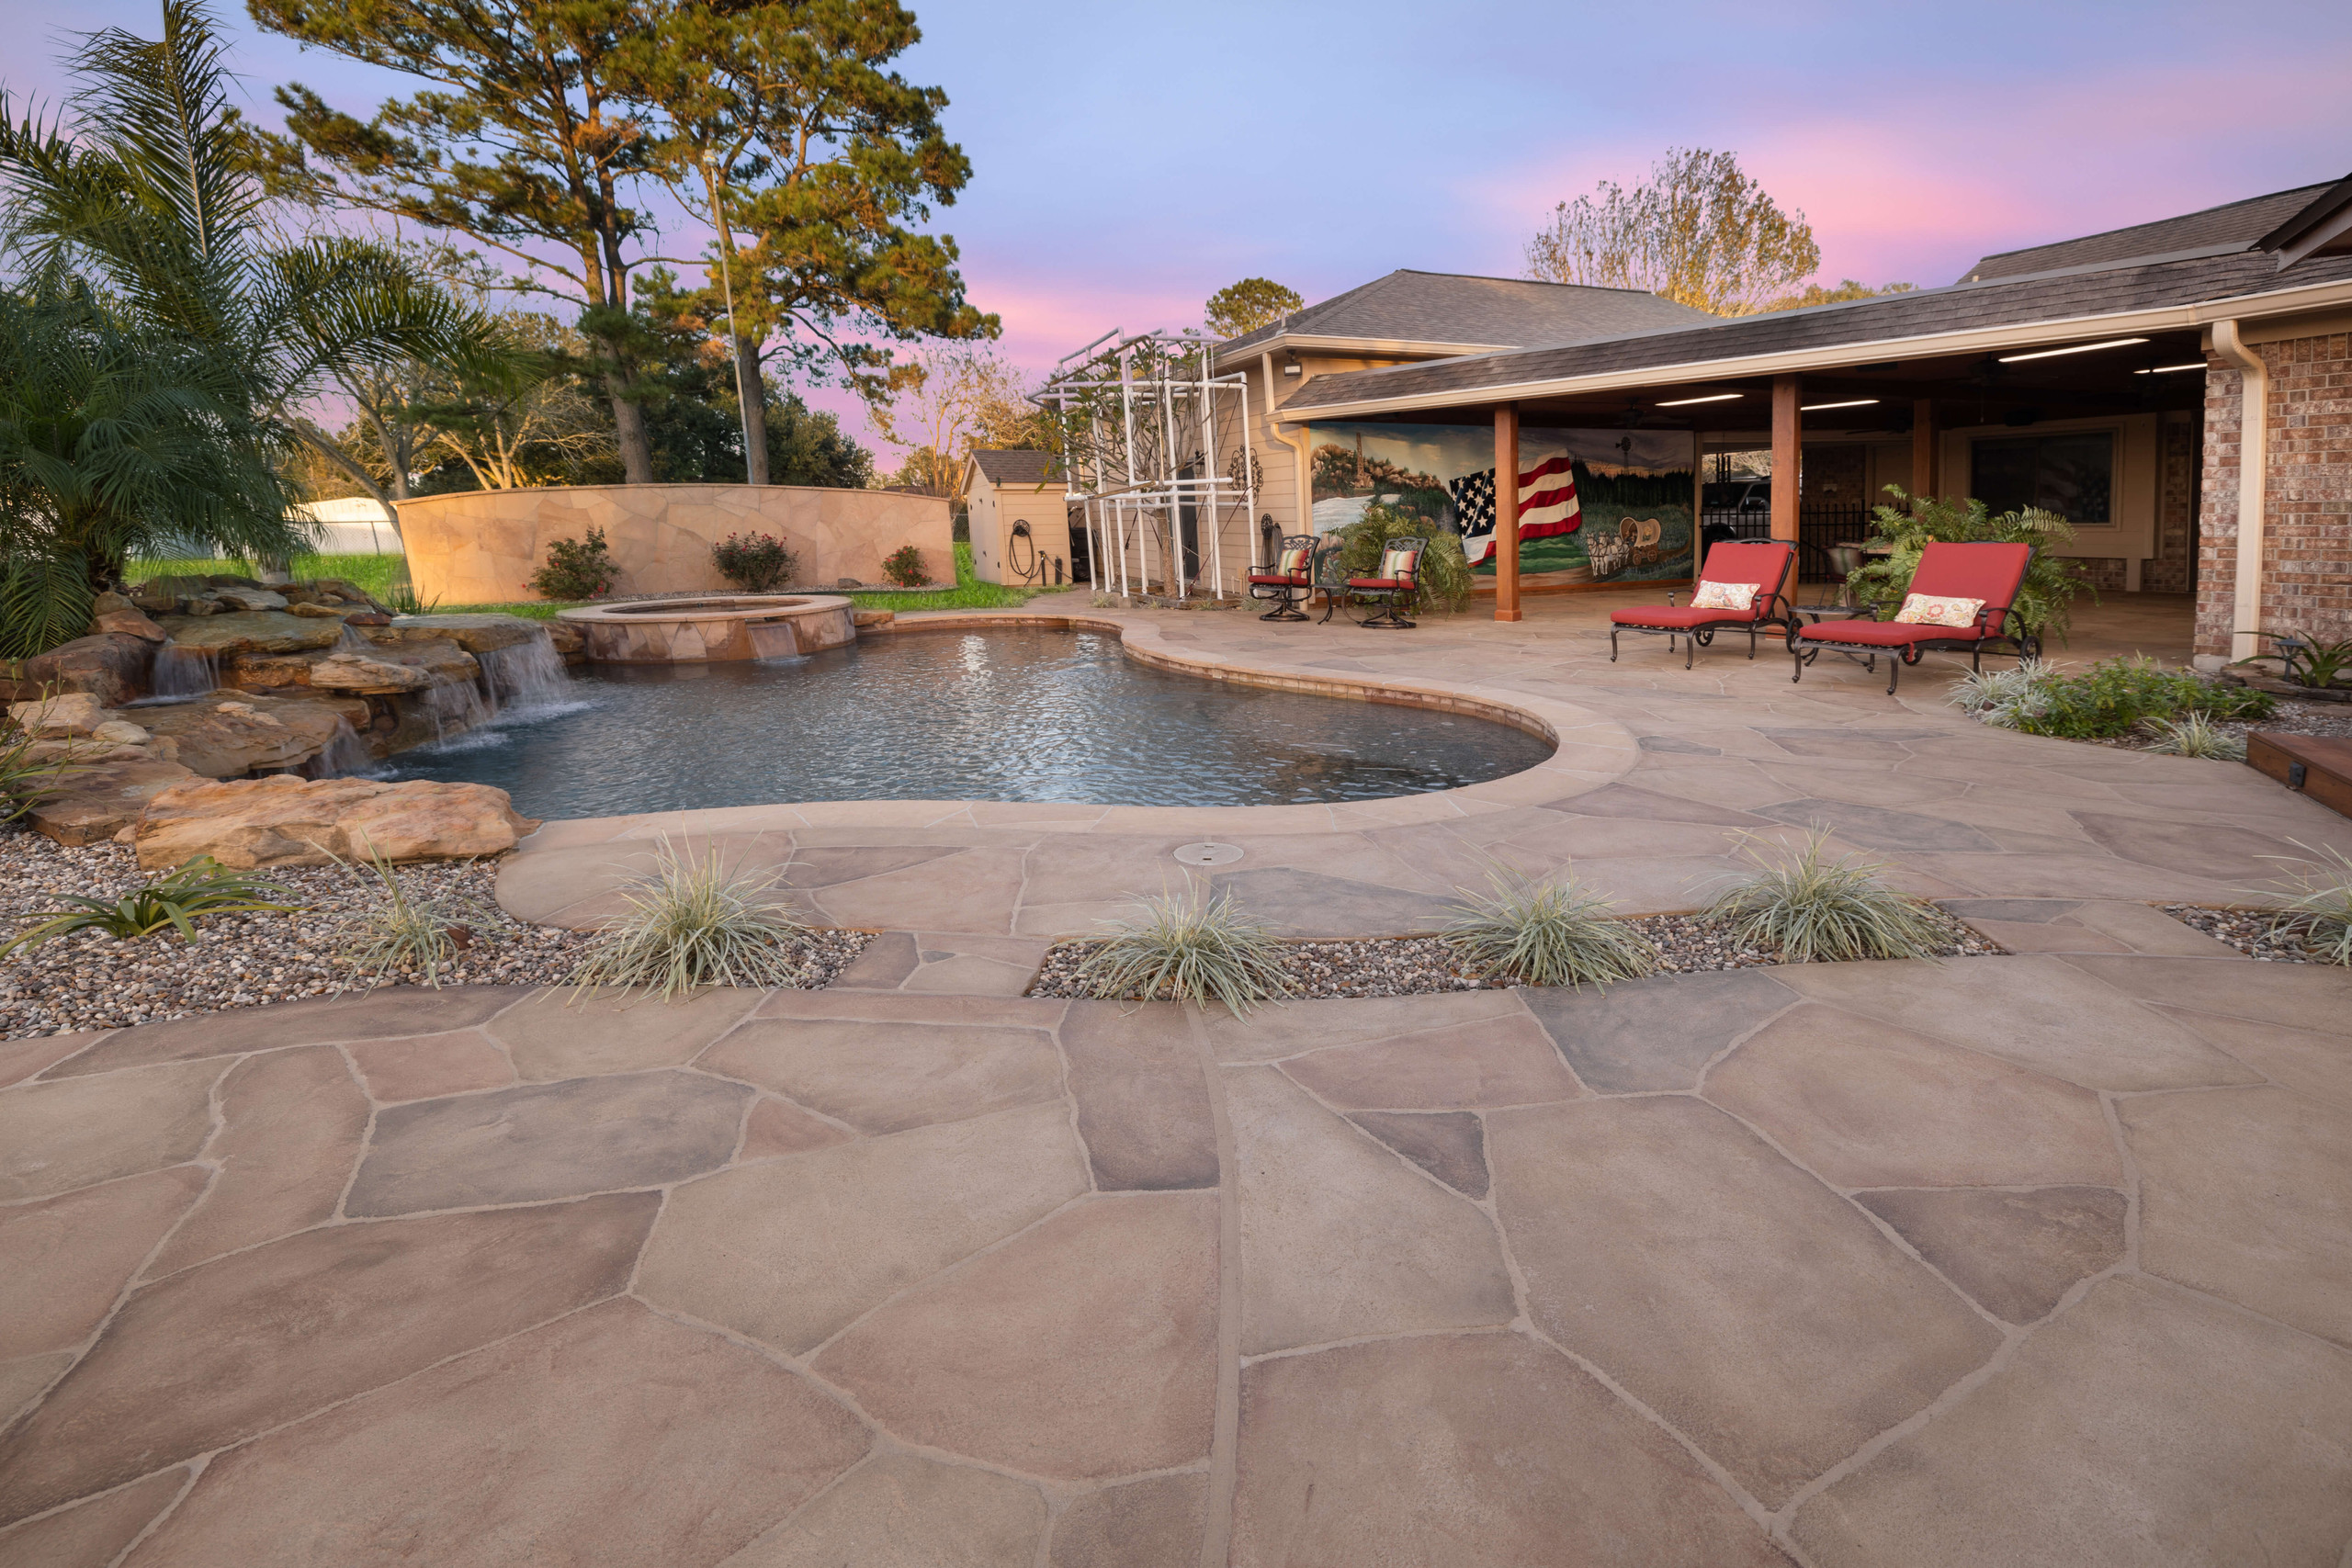 custom concrete overlay pool decking Carvestone design idea in Houston Texas